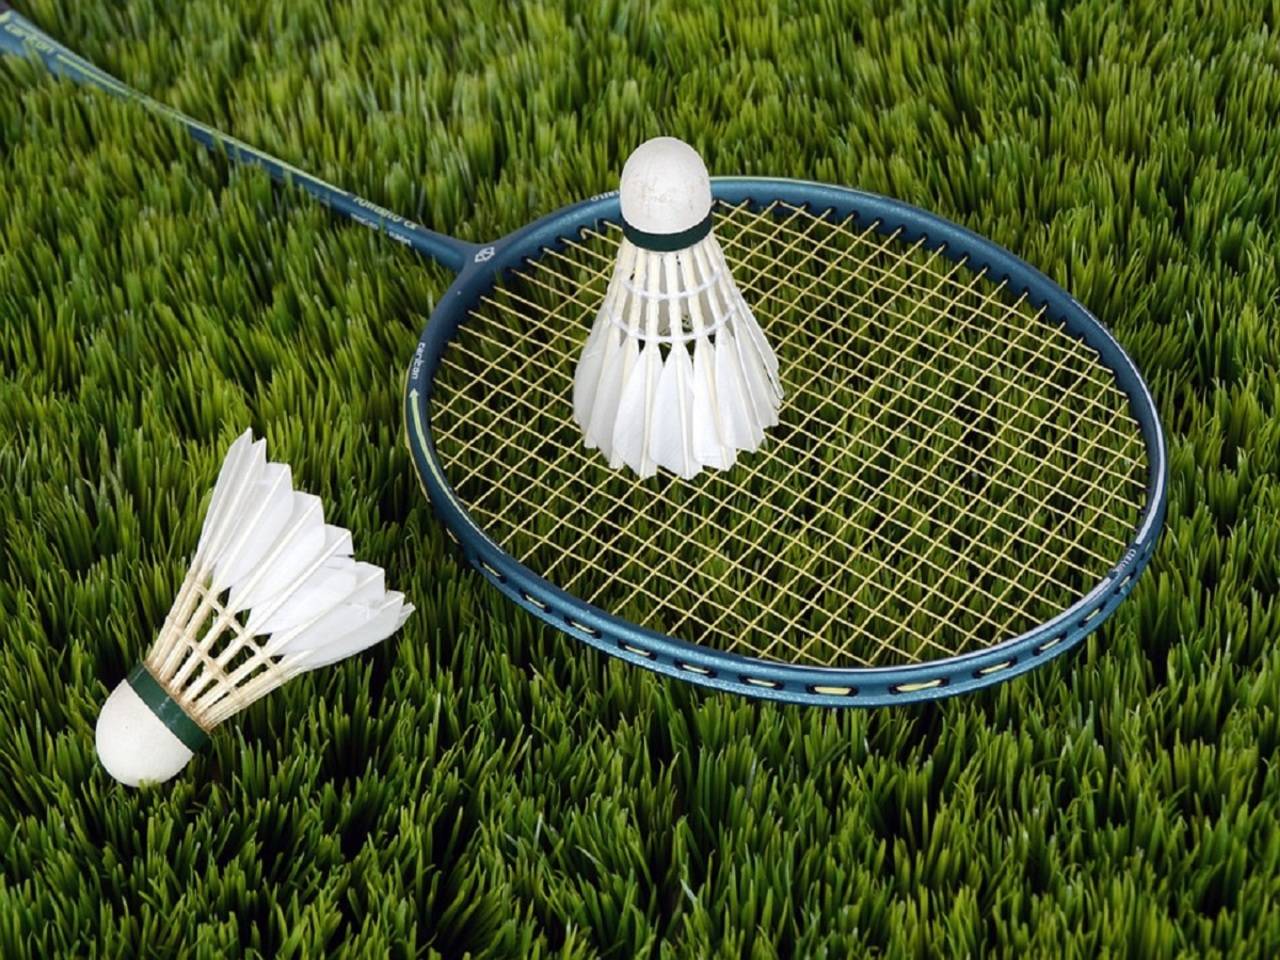 badminton products online